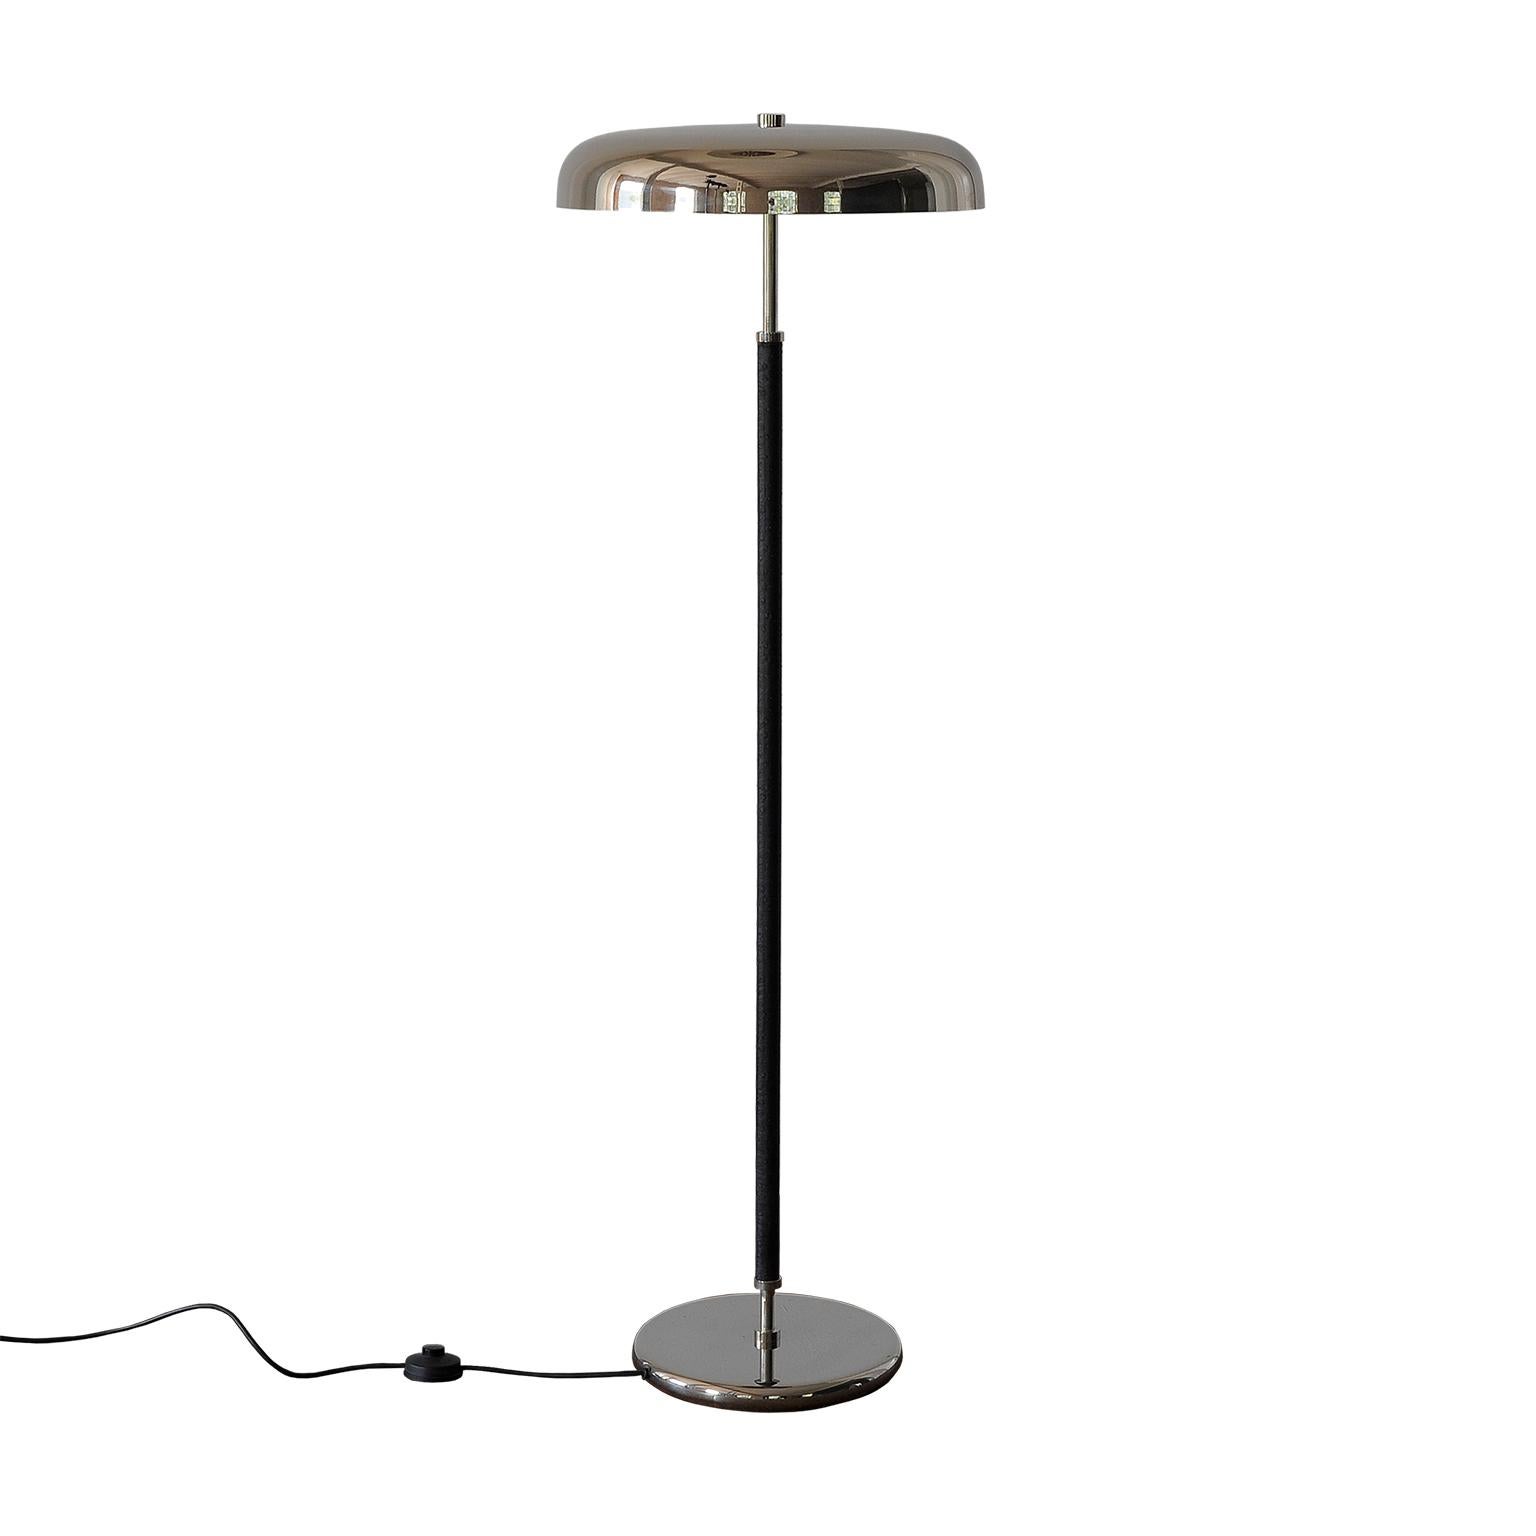 German 20th Century Art Deco Leather Clad Floor Lamp For Sale